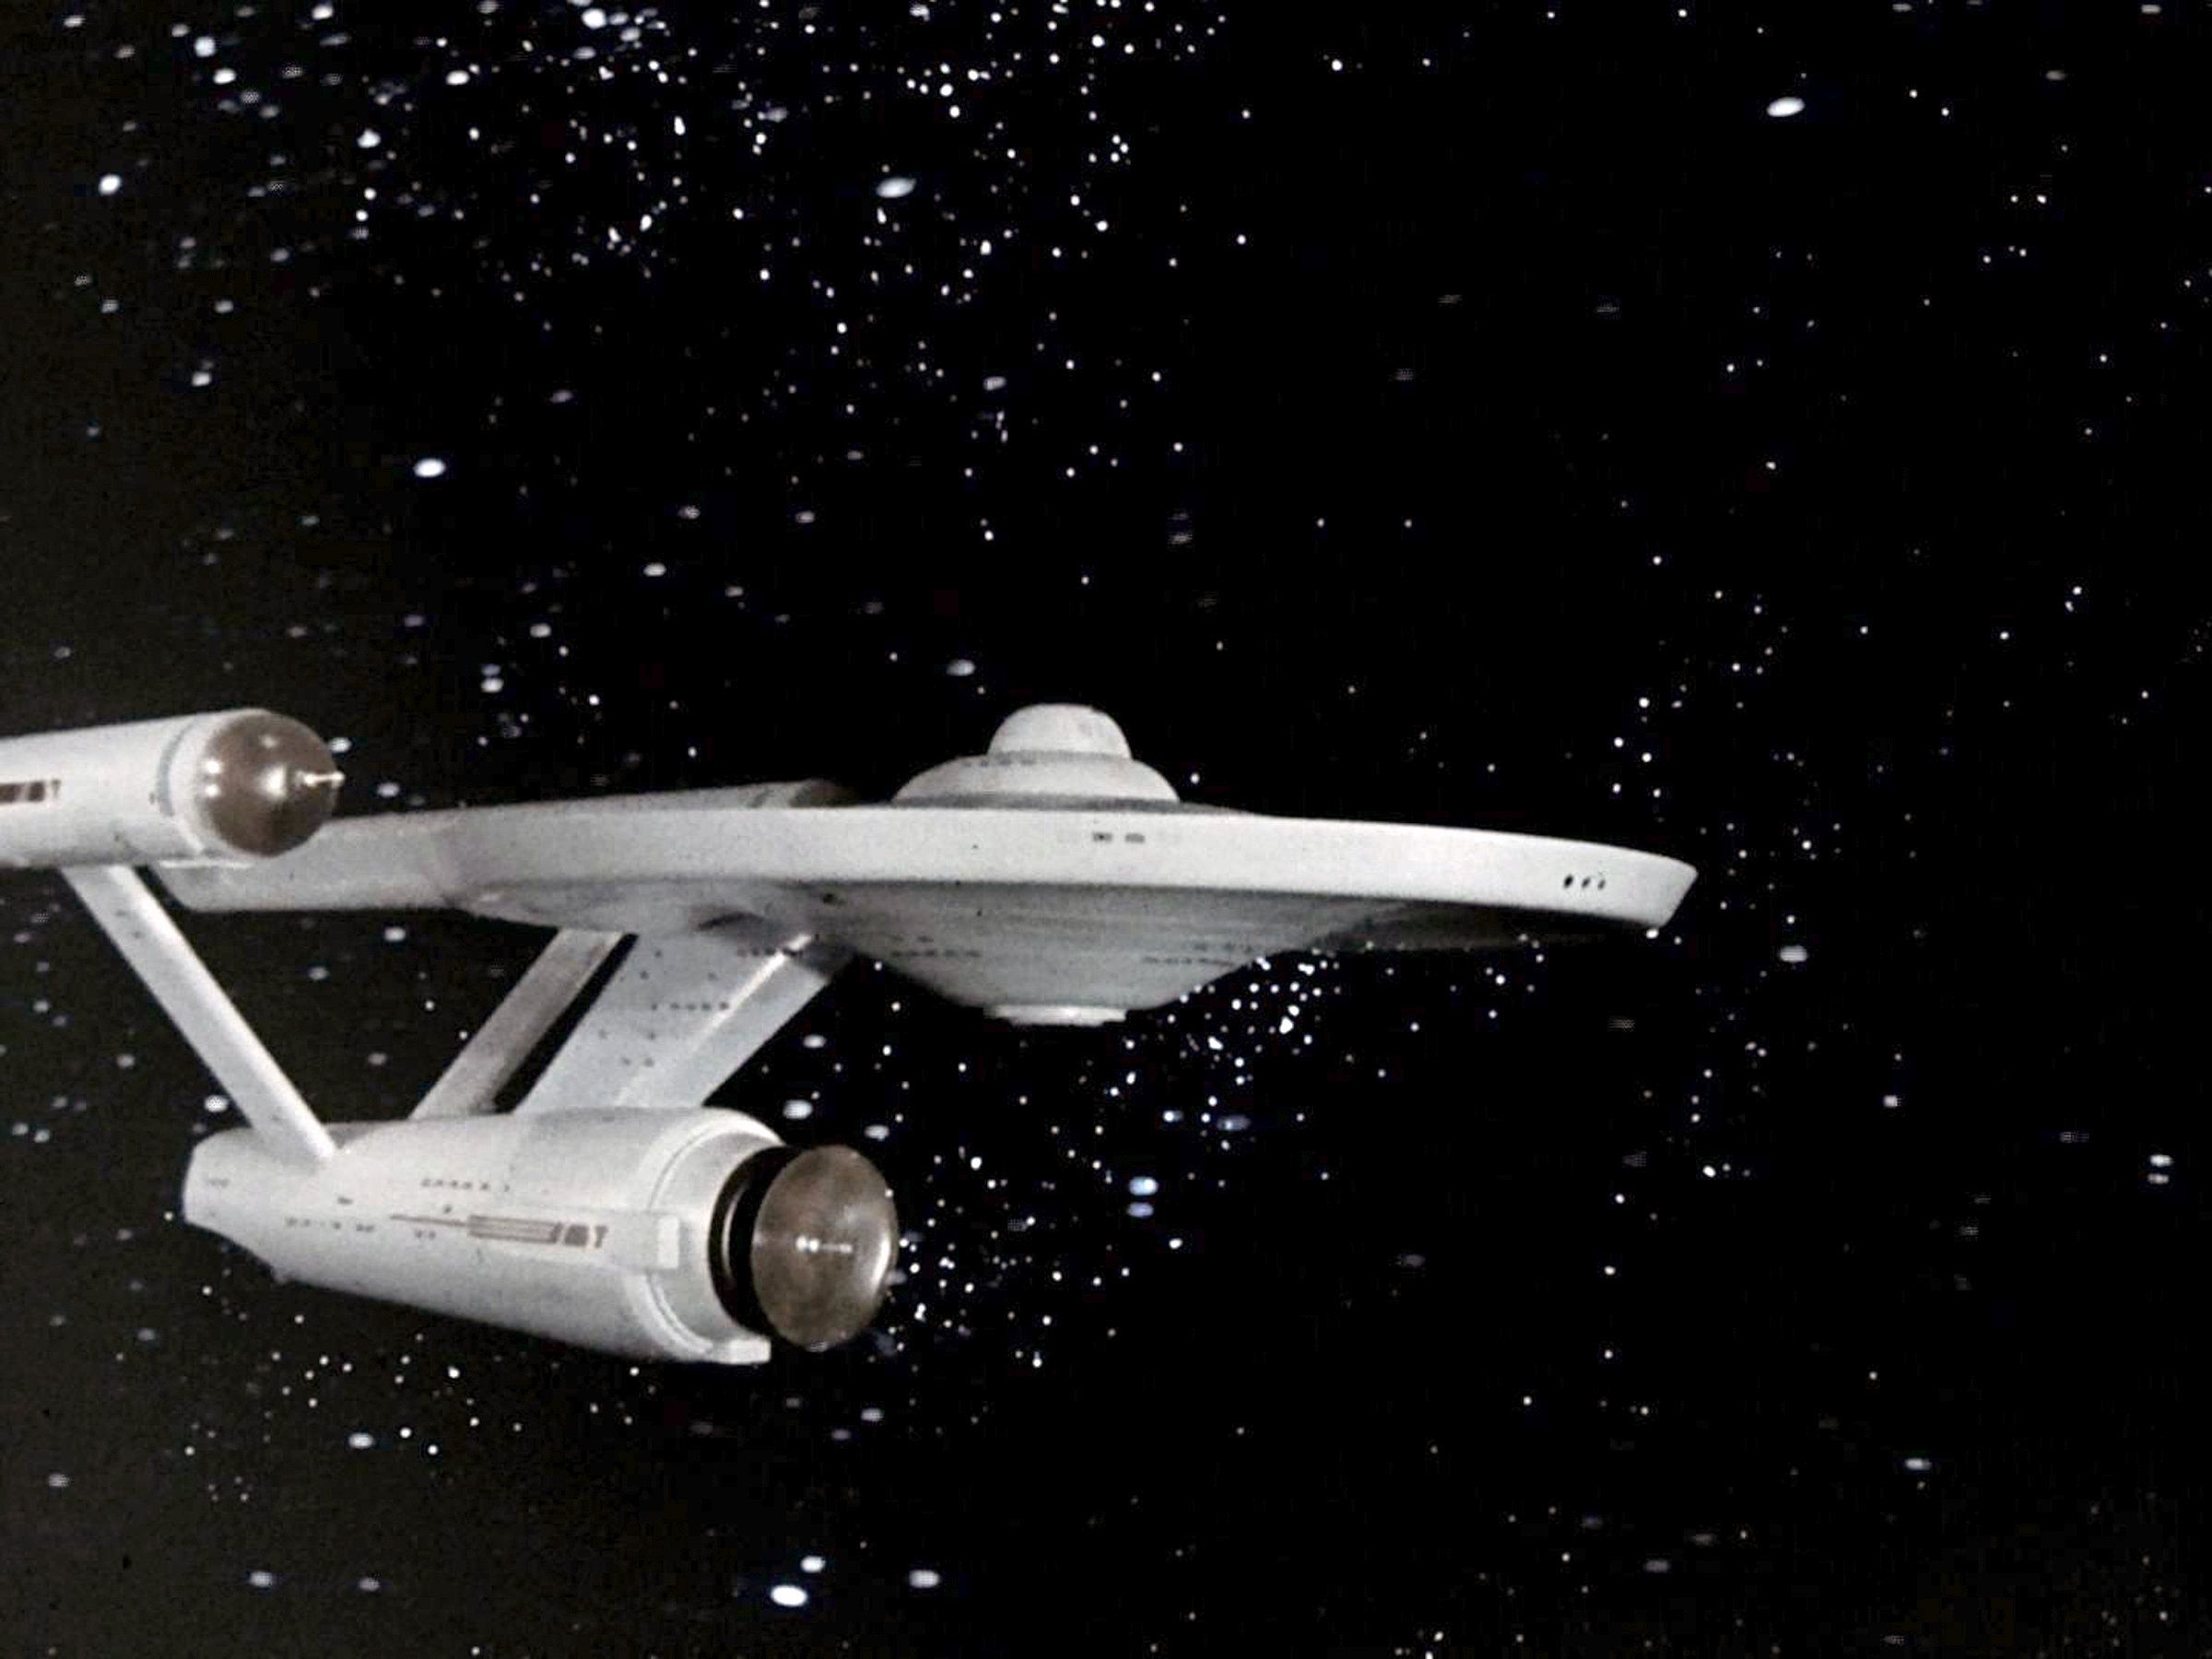 The USS Enterprise or the Starship Enterprise.